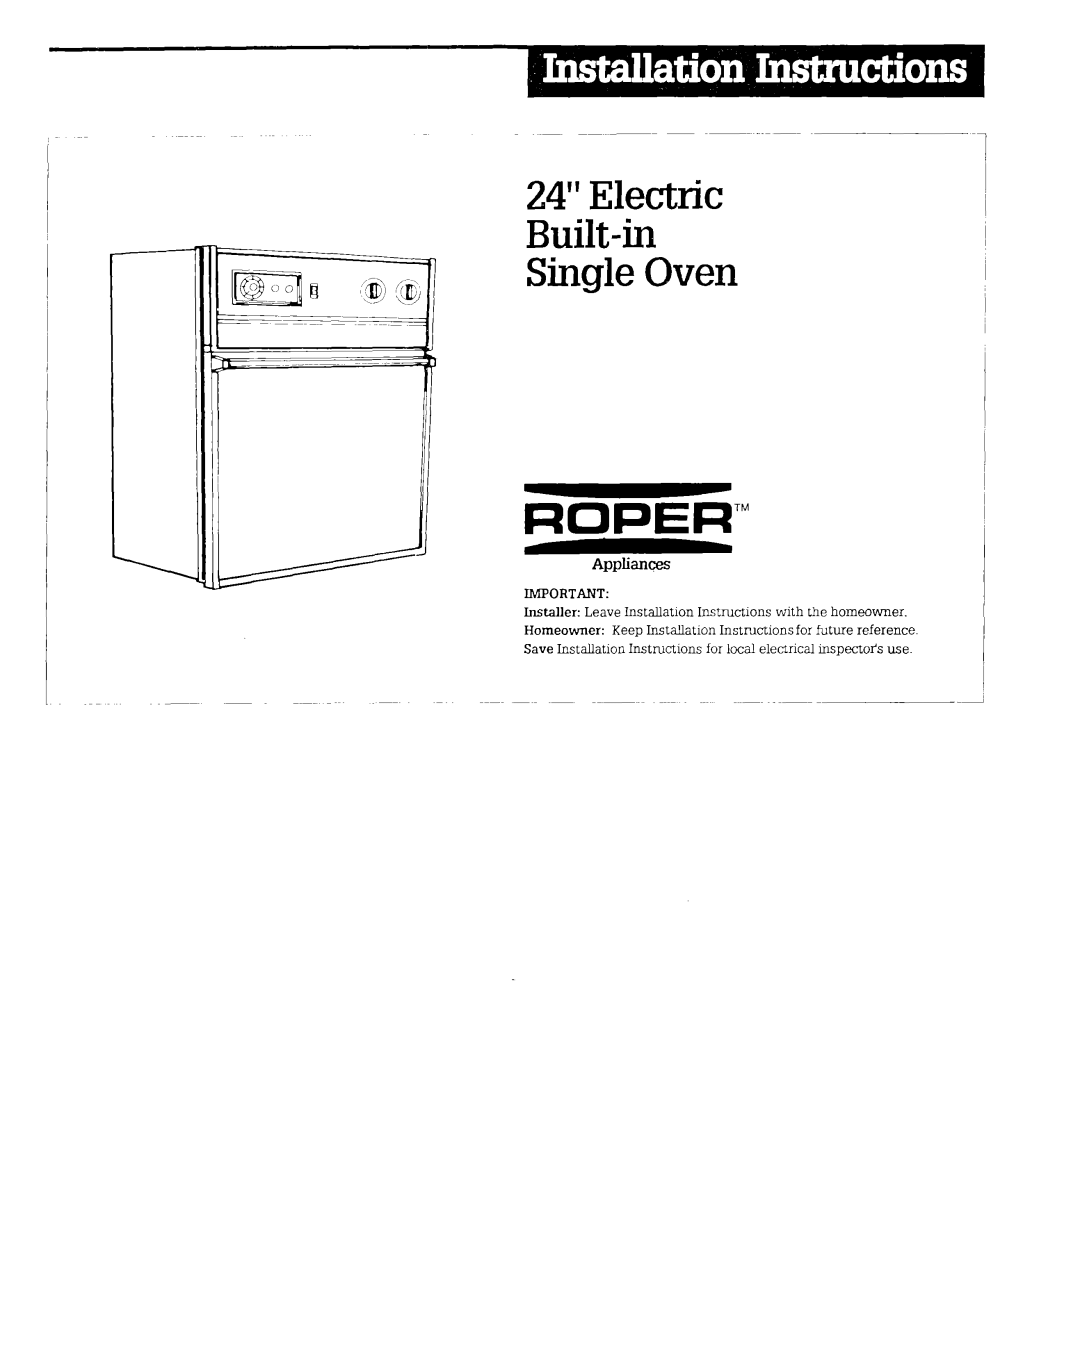 Roper Convection Oven installation instructions 24” Electric Built-inSingleOven ROPER’” T 